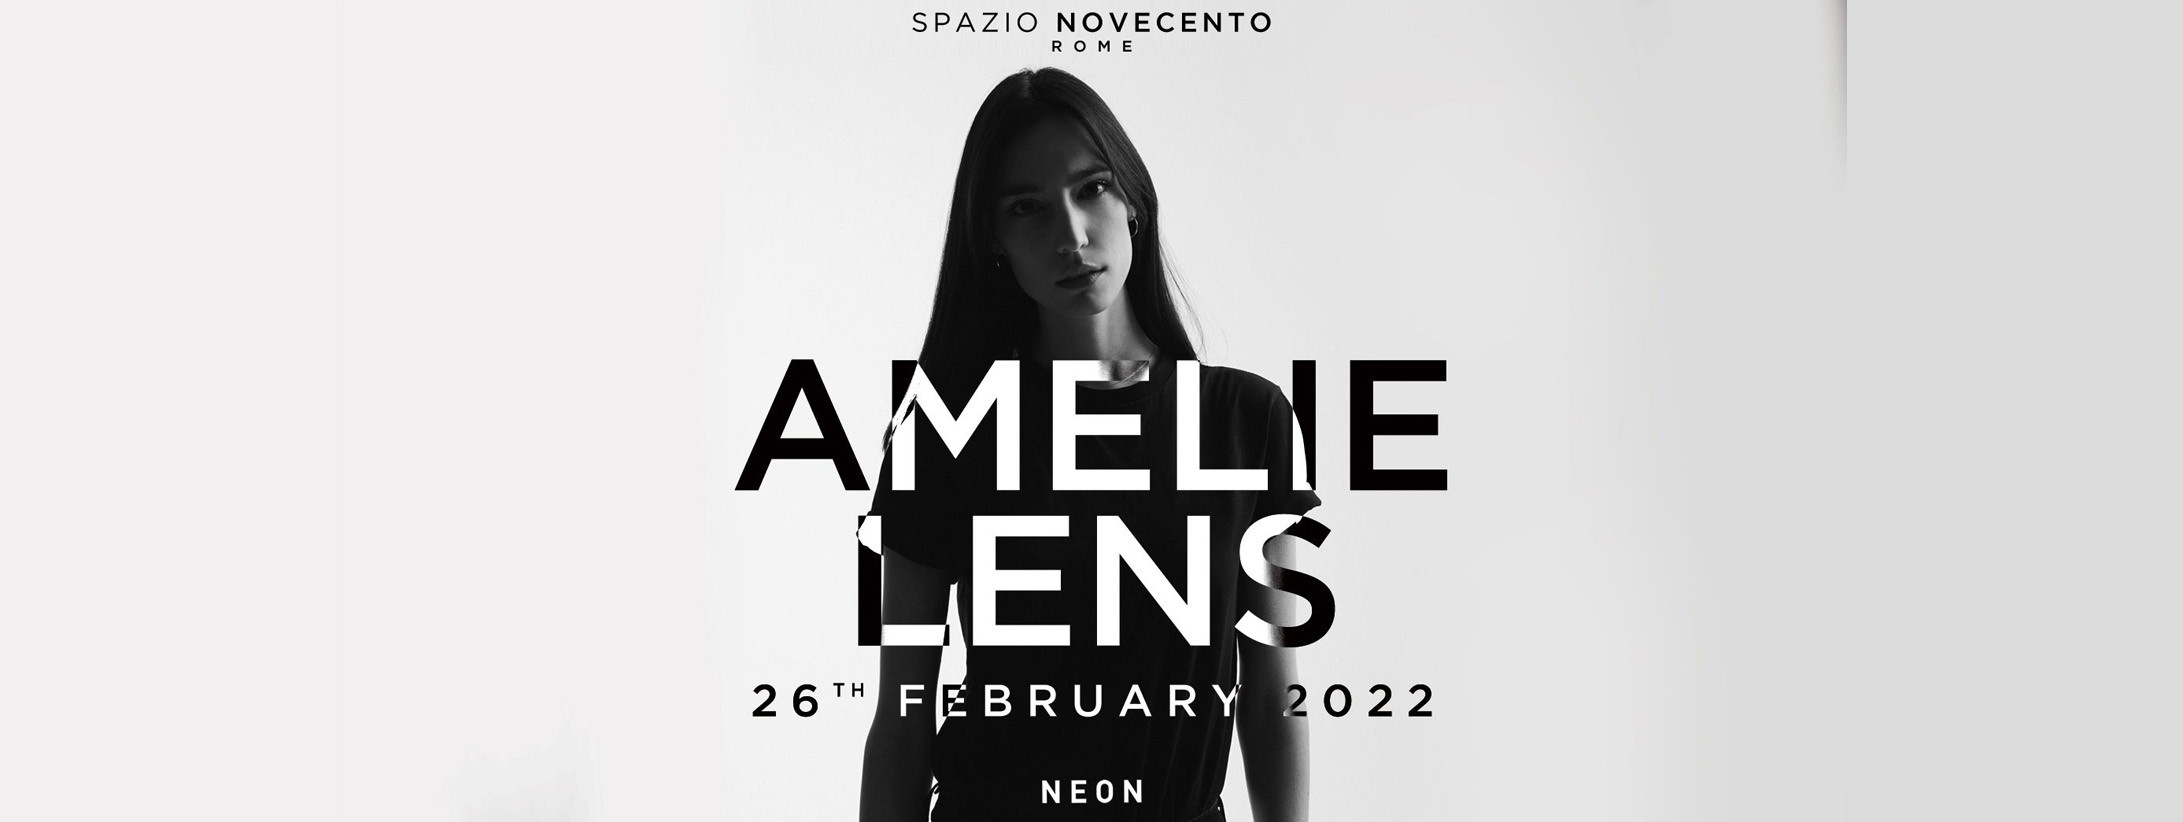 Amelie Lens Spazio Novecento 26 Febbraio 2022